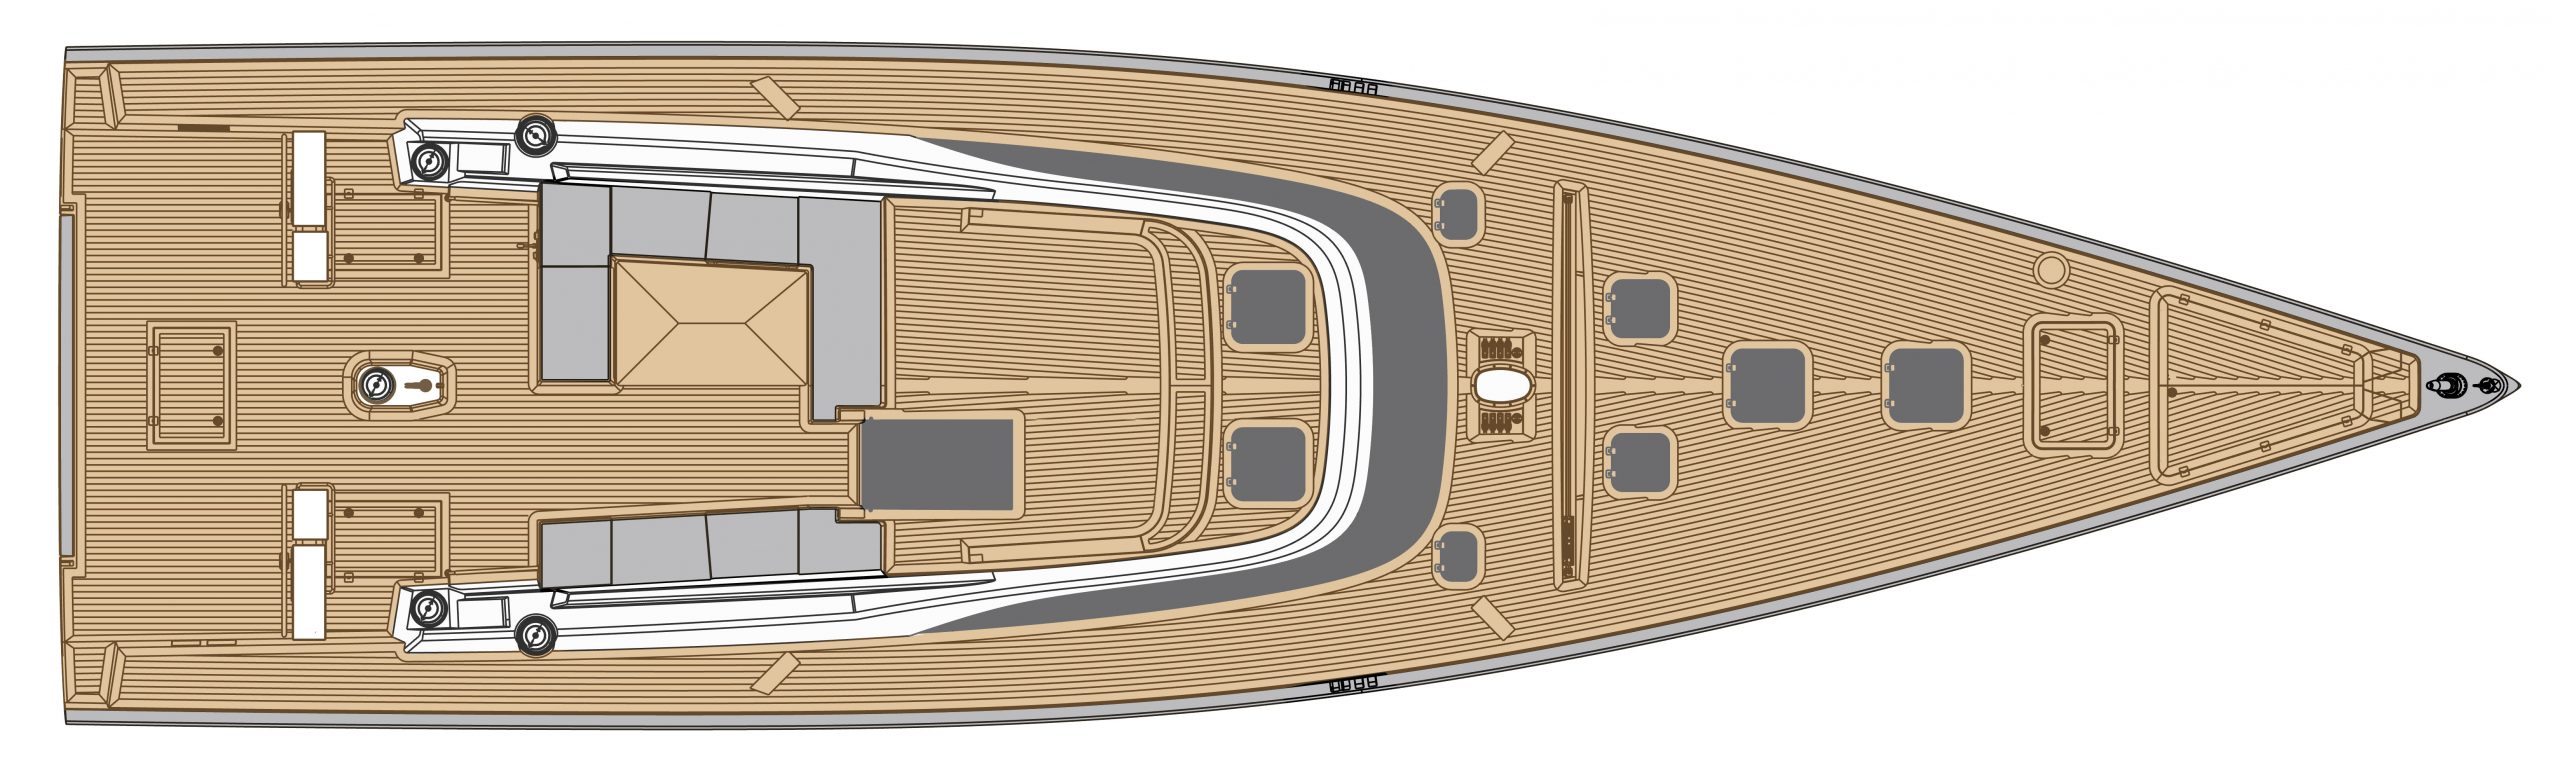 solaris yacht 64